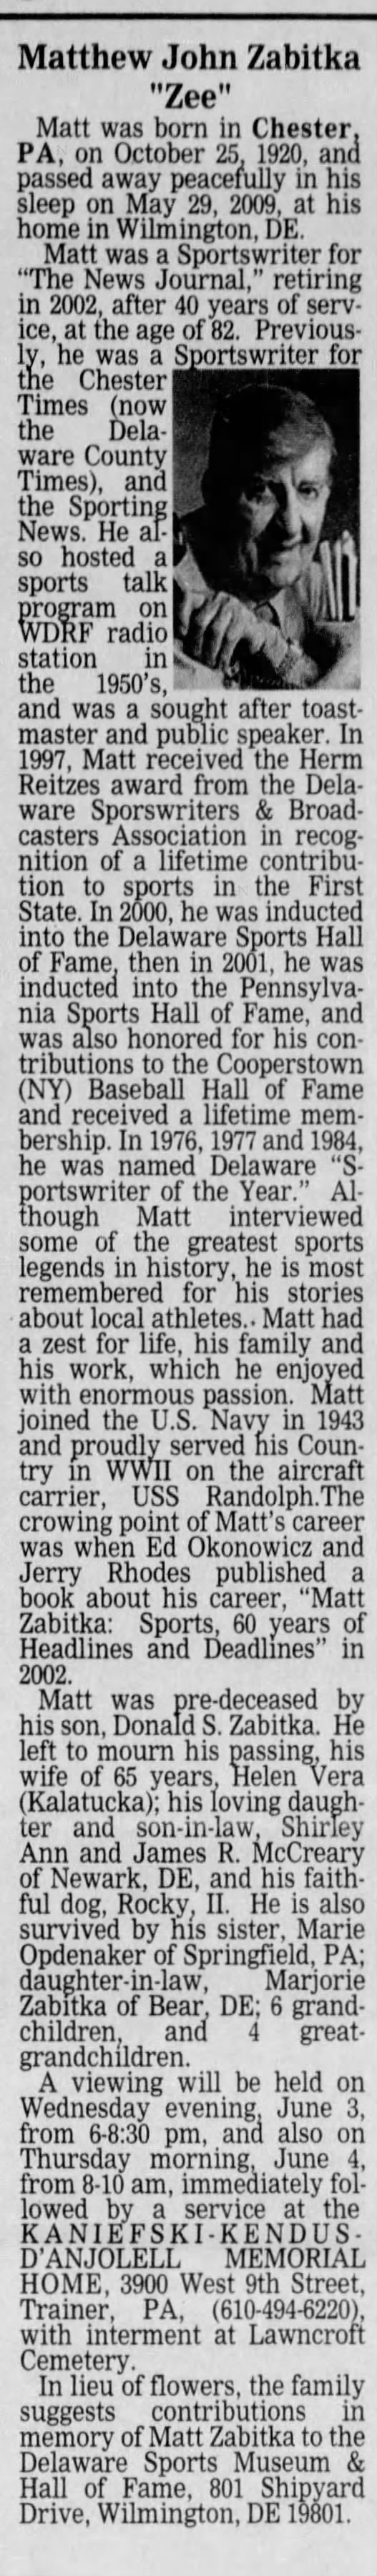 Obituary for Matthew John Zabitka Matt, 1920-2009 (Aged 82)